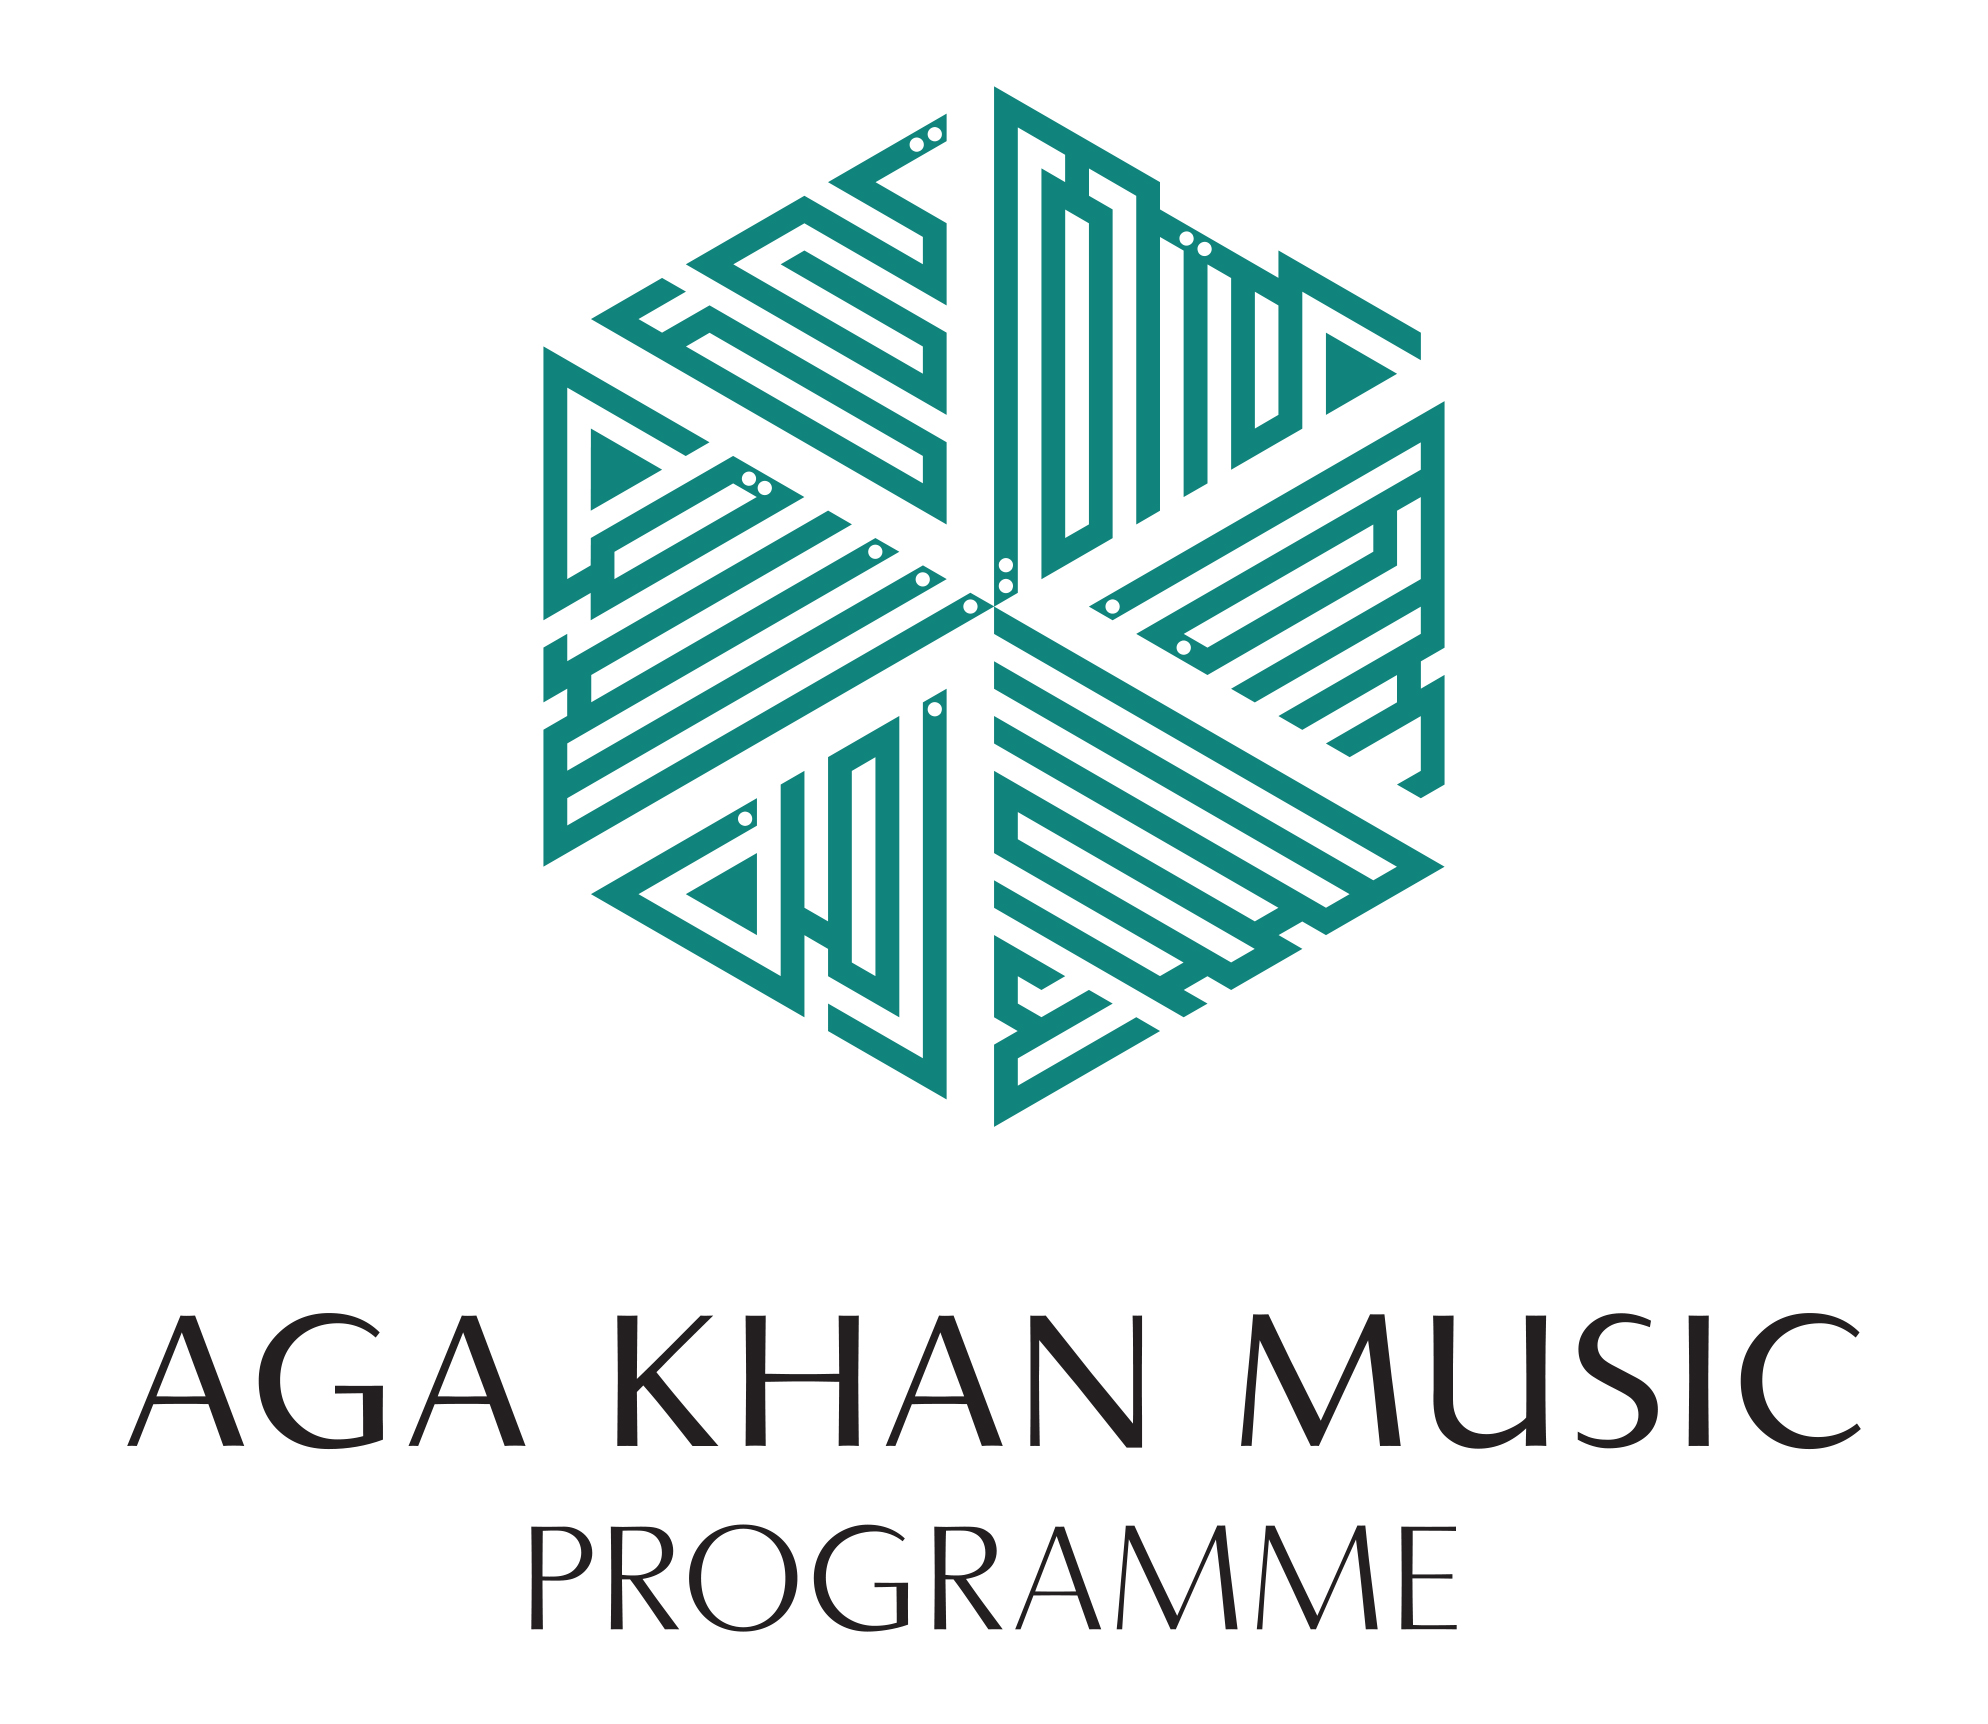 Aga Khan Music Programme